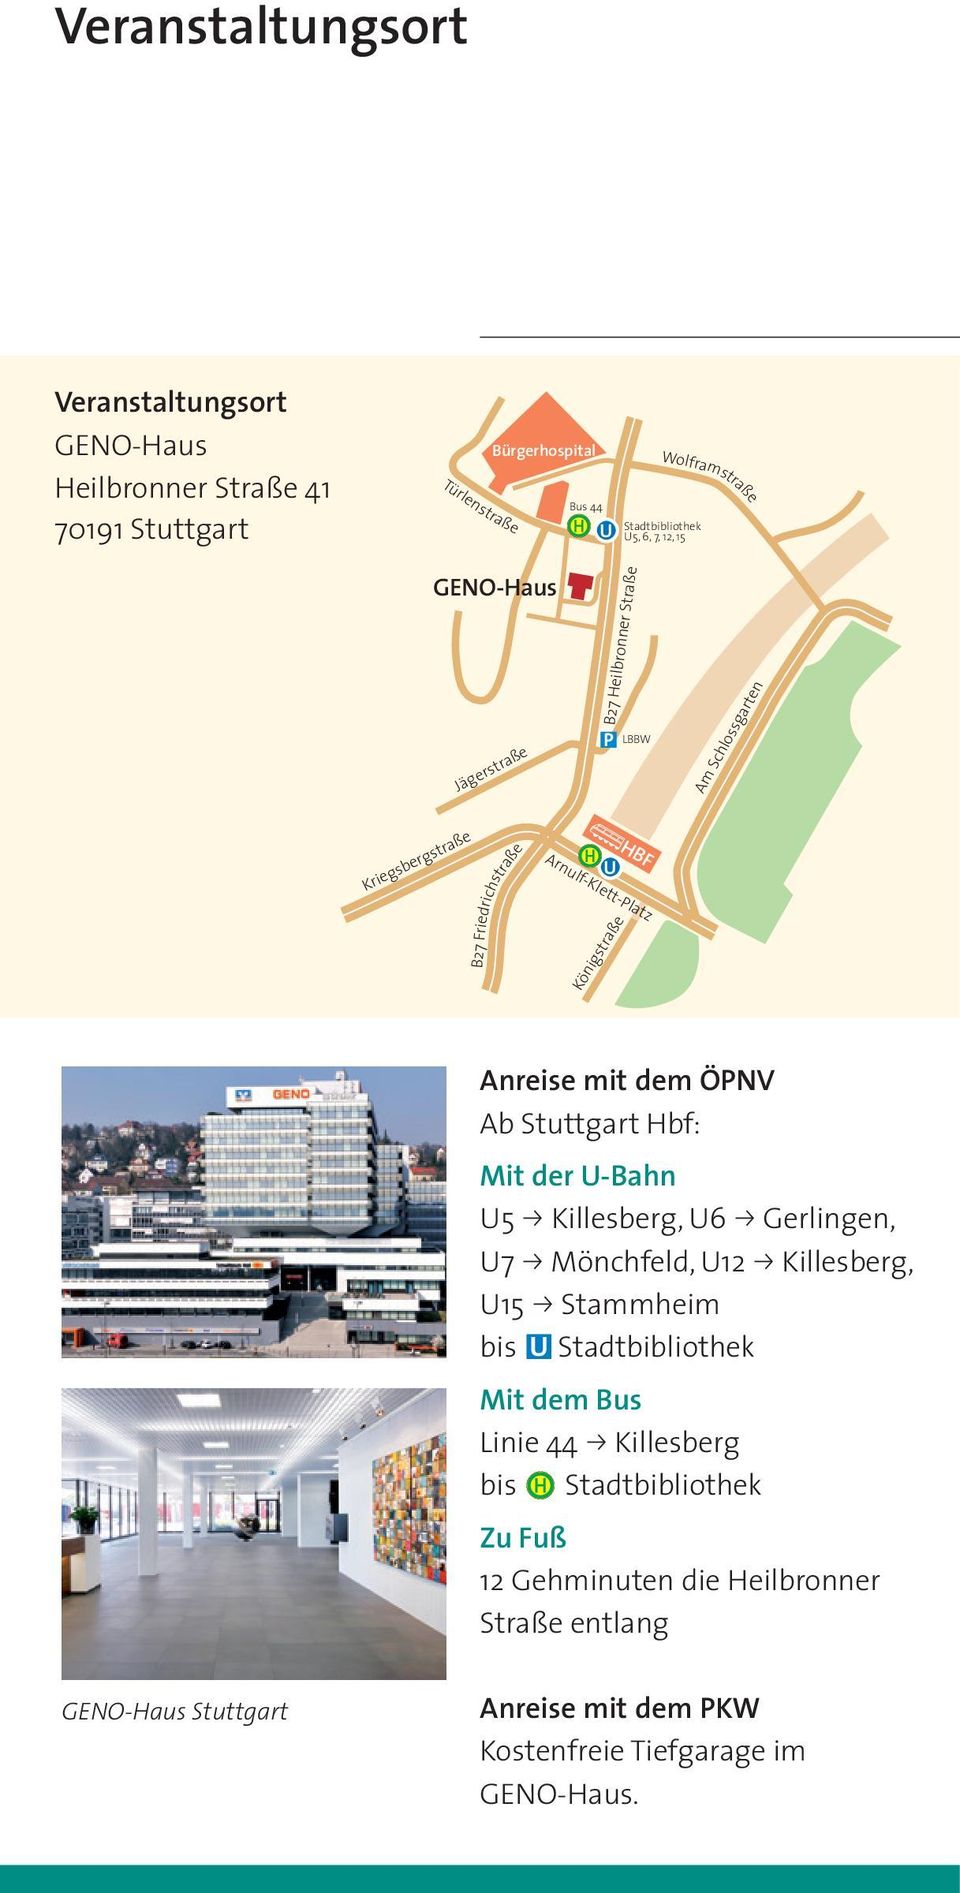 dem ÖPNV Ab Stuttgart Hbf: Mit der U-Bahn U5 p Killesberg, U6 p Gerlingen, U7 p Mönchfeld, U12 p Killesberg, U15 p Stammheim bis U Stadtbibliothek Mit dem Bus